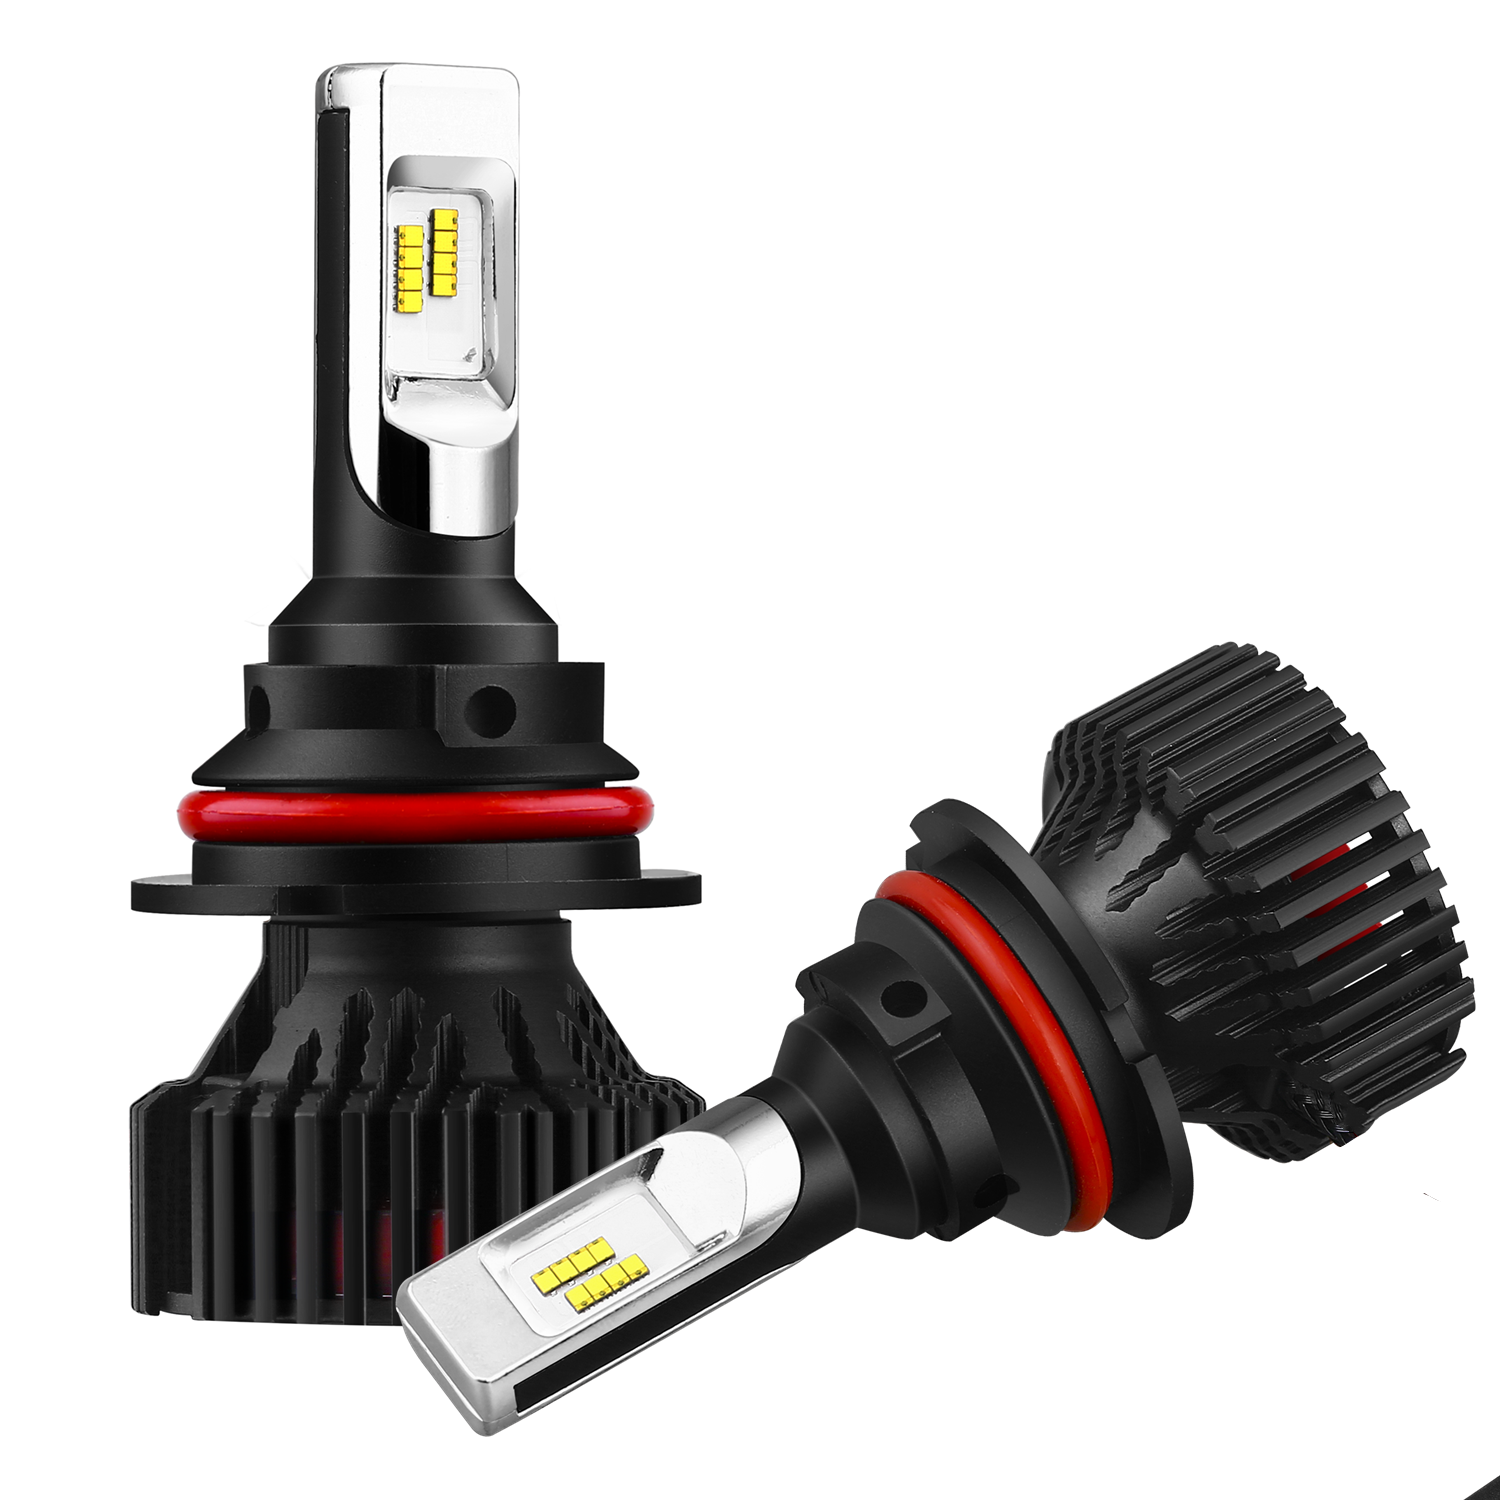 HB5 9007 LED Headlights Bulbs for Dodge Ram Replace Halogen Headlamps